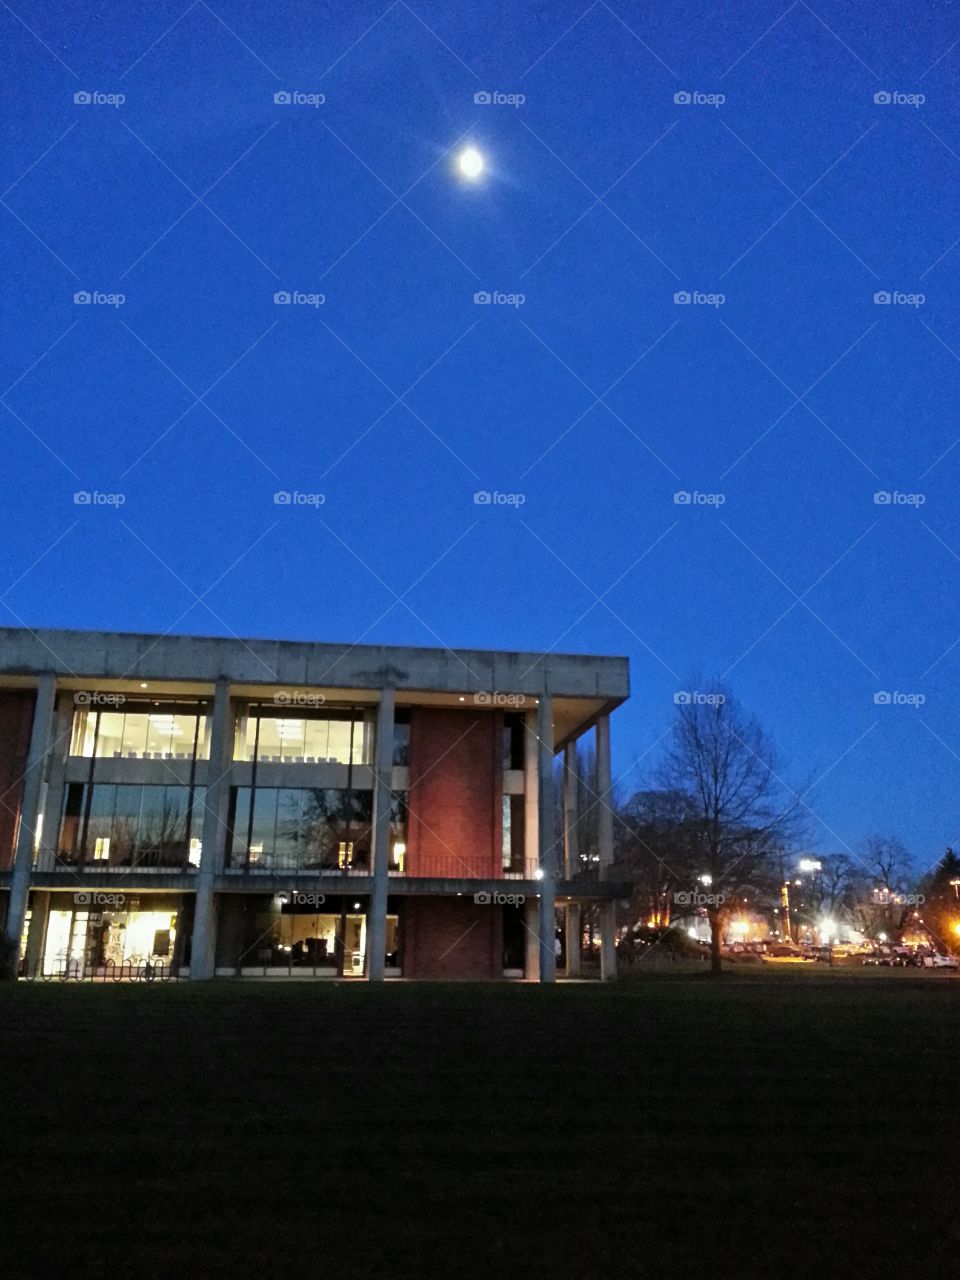 University Center by Moonlight, Willamette University, Salem, Oregon